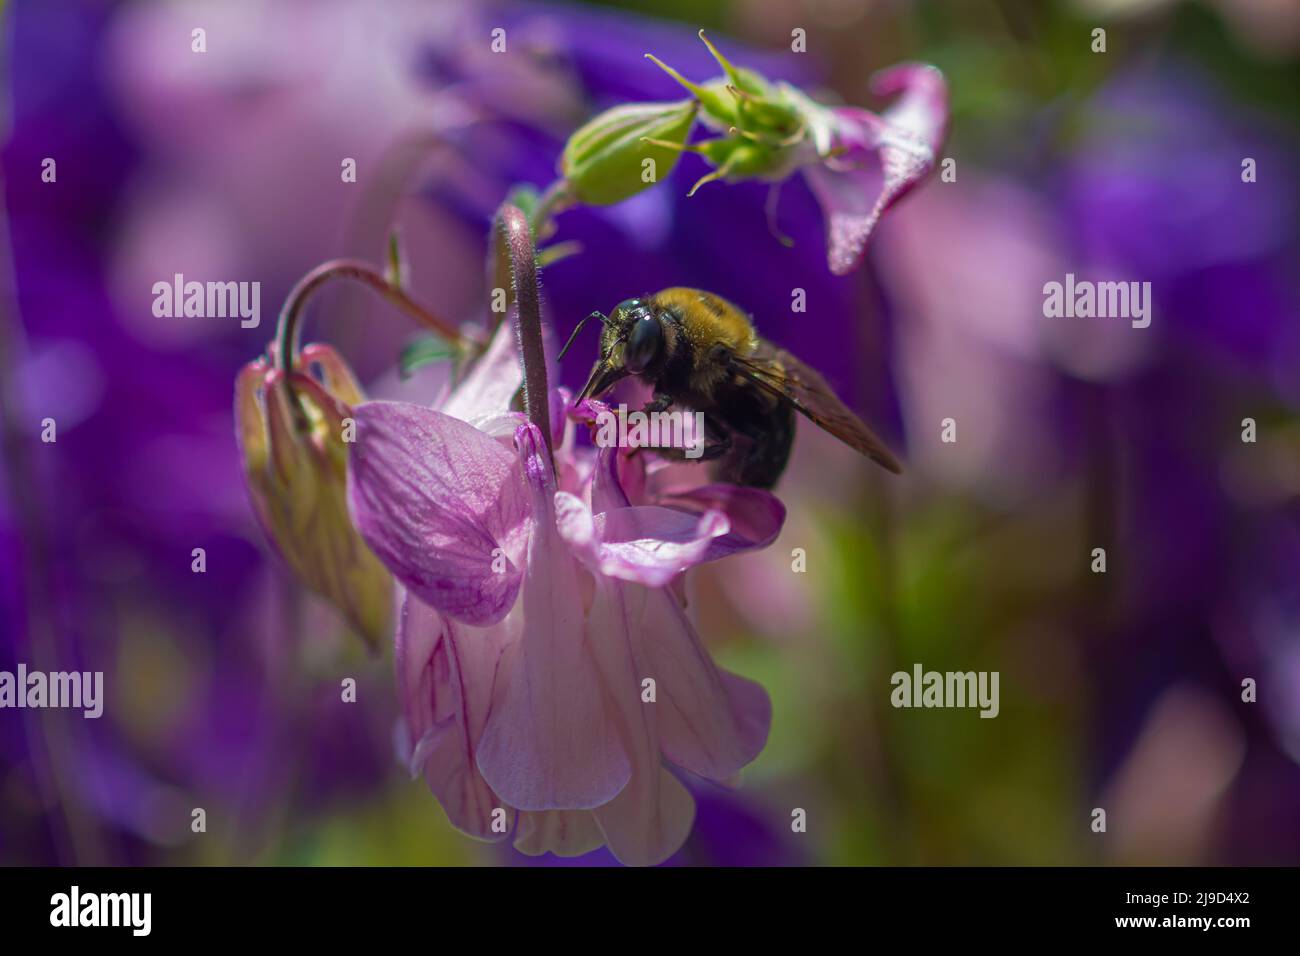 A bumble bee eats nectar and pollen on flowers. Botanical Garden Flora Stock Photo